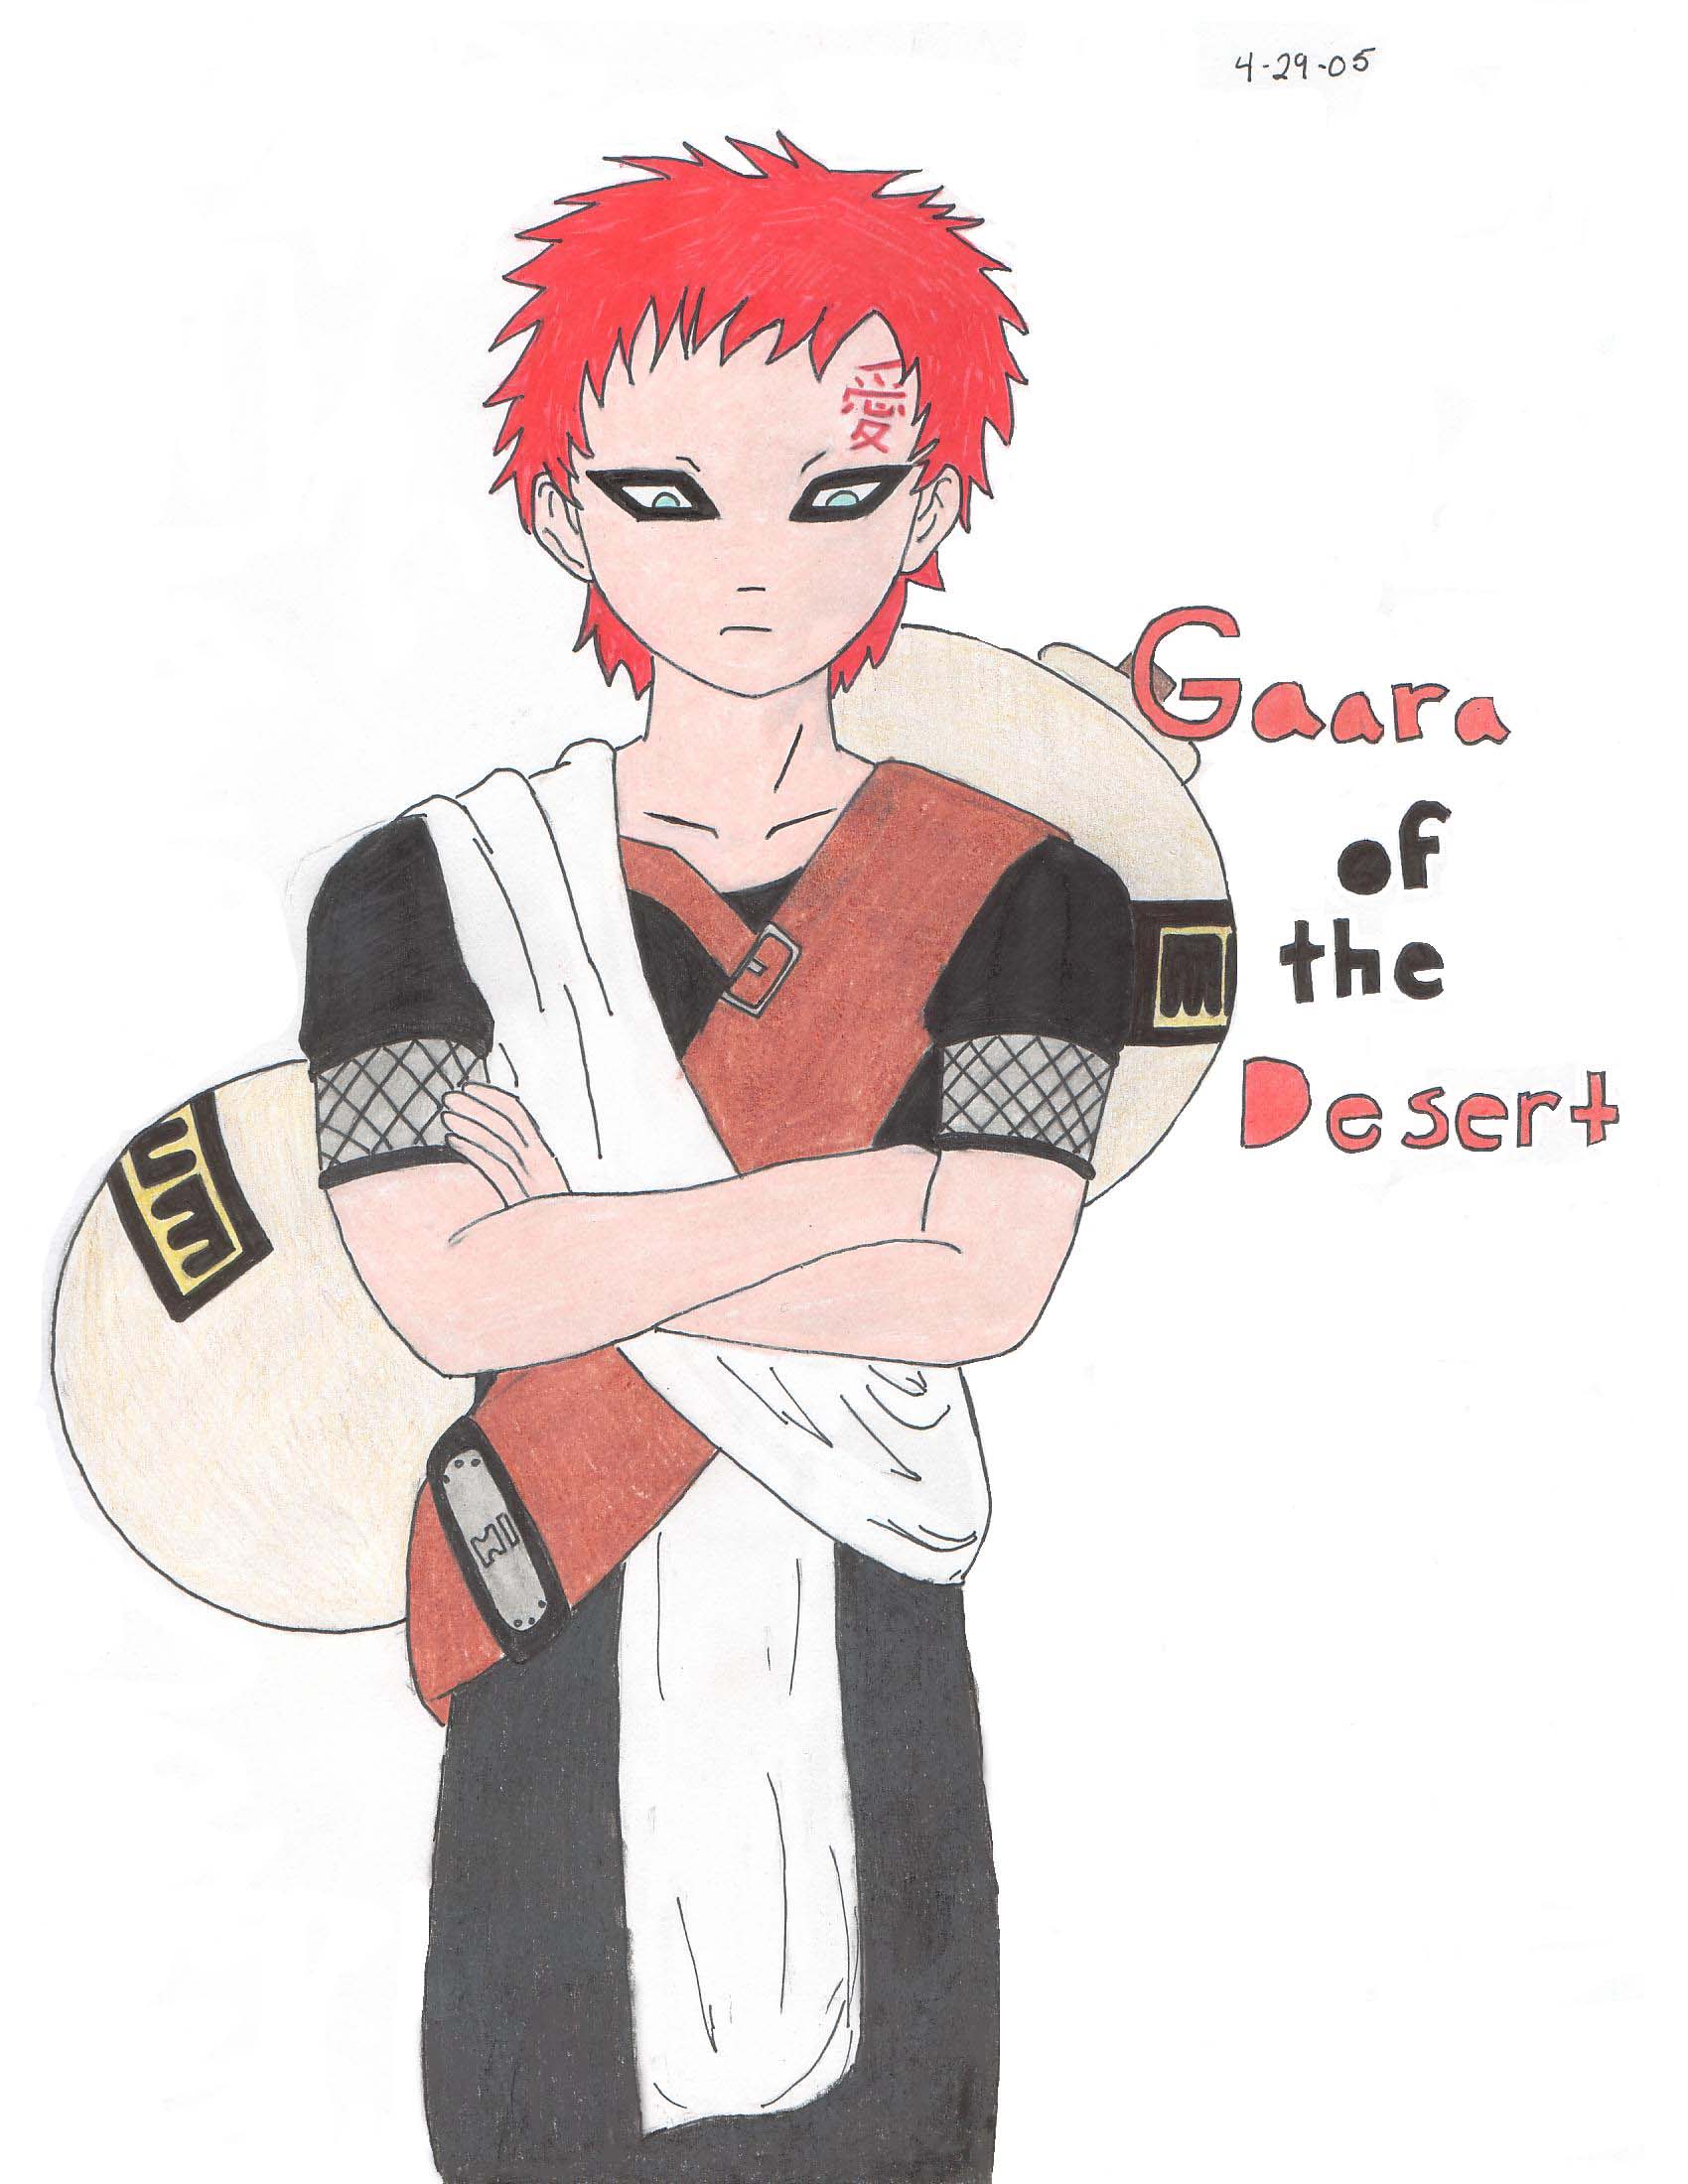 Gaara of the Desert by Marise-chan